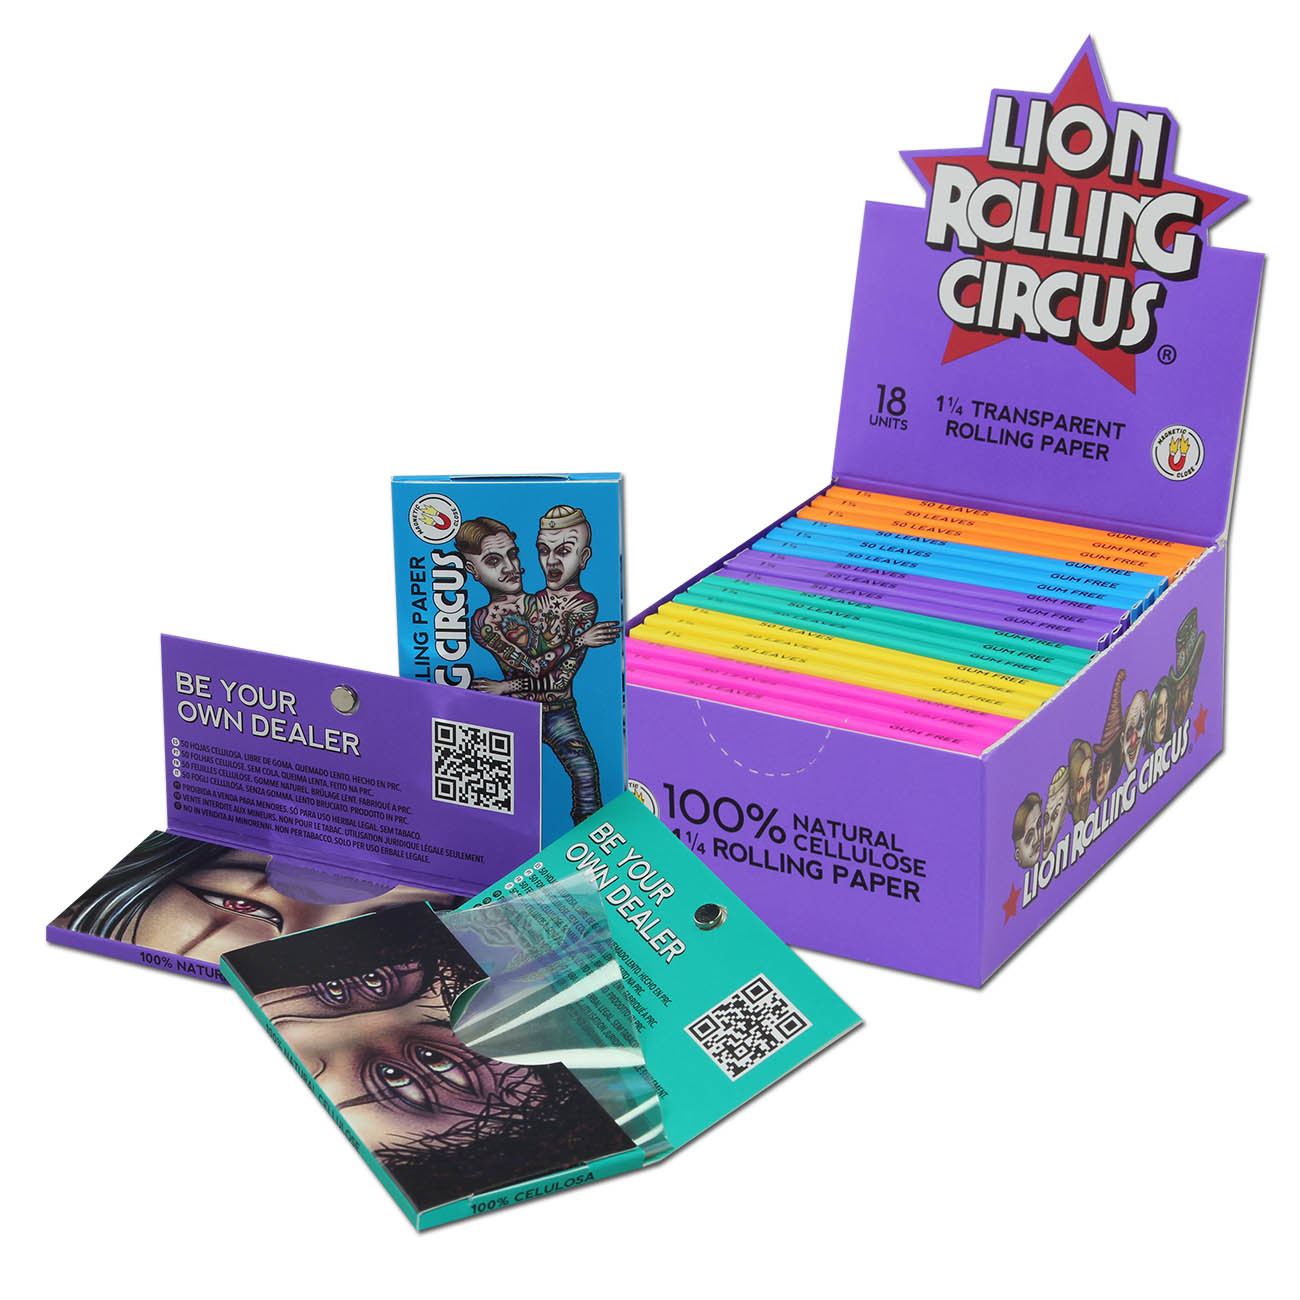 Lion Rolling Circus celulózové papírky 1¼